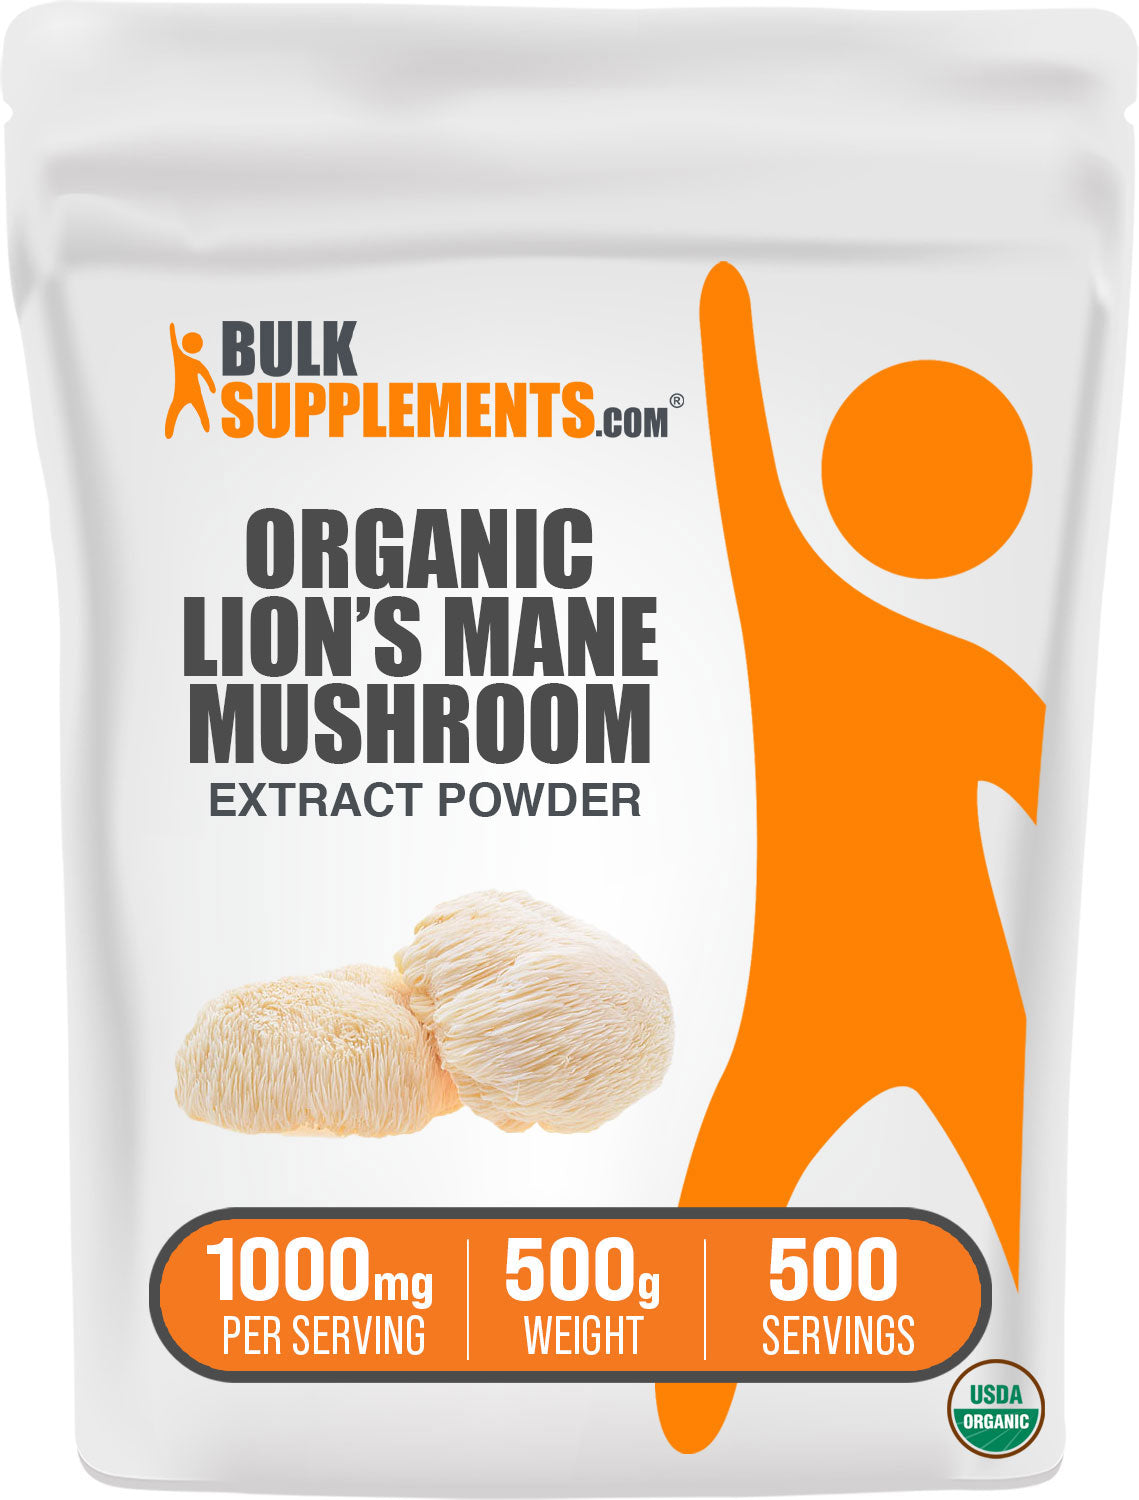 BulkSupplements.com Organic Lion's Mane Mushroom Extract Powder 500g bag